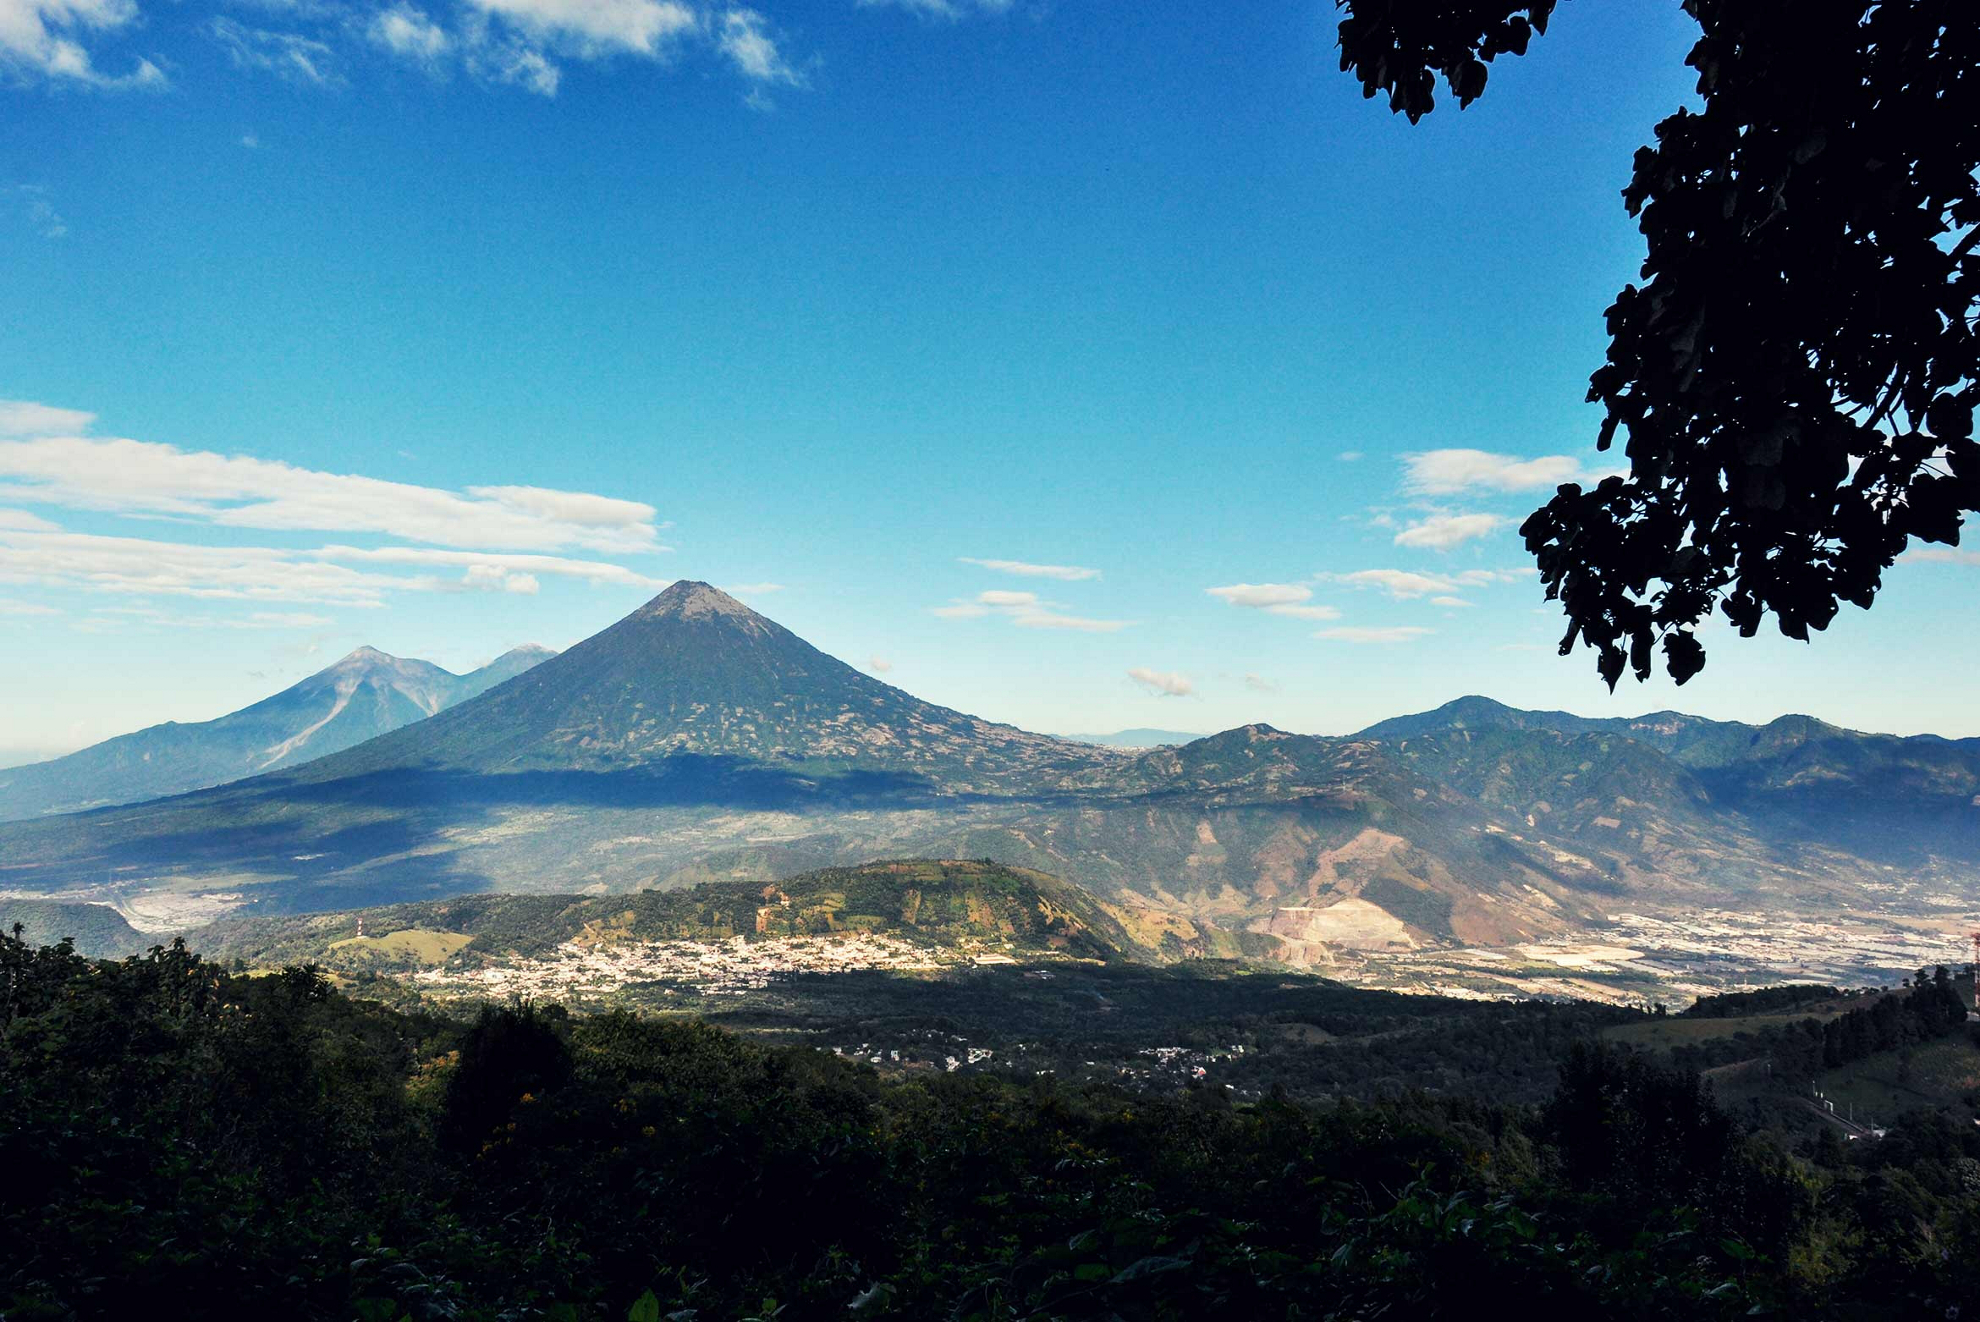 volcanoes-of-america-guatemala-pin-and-travel